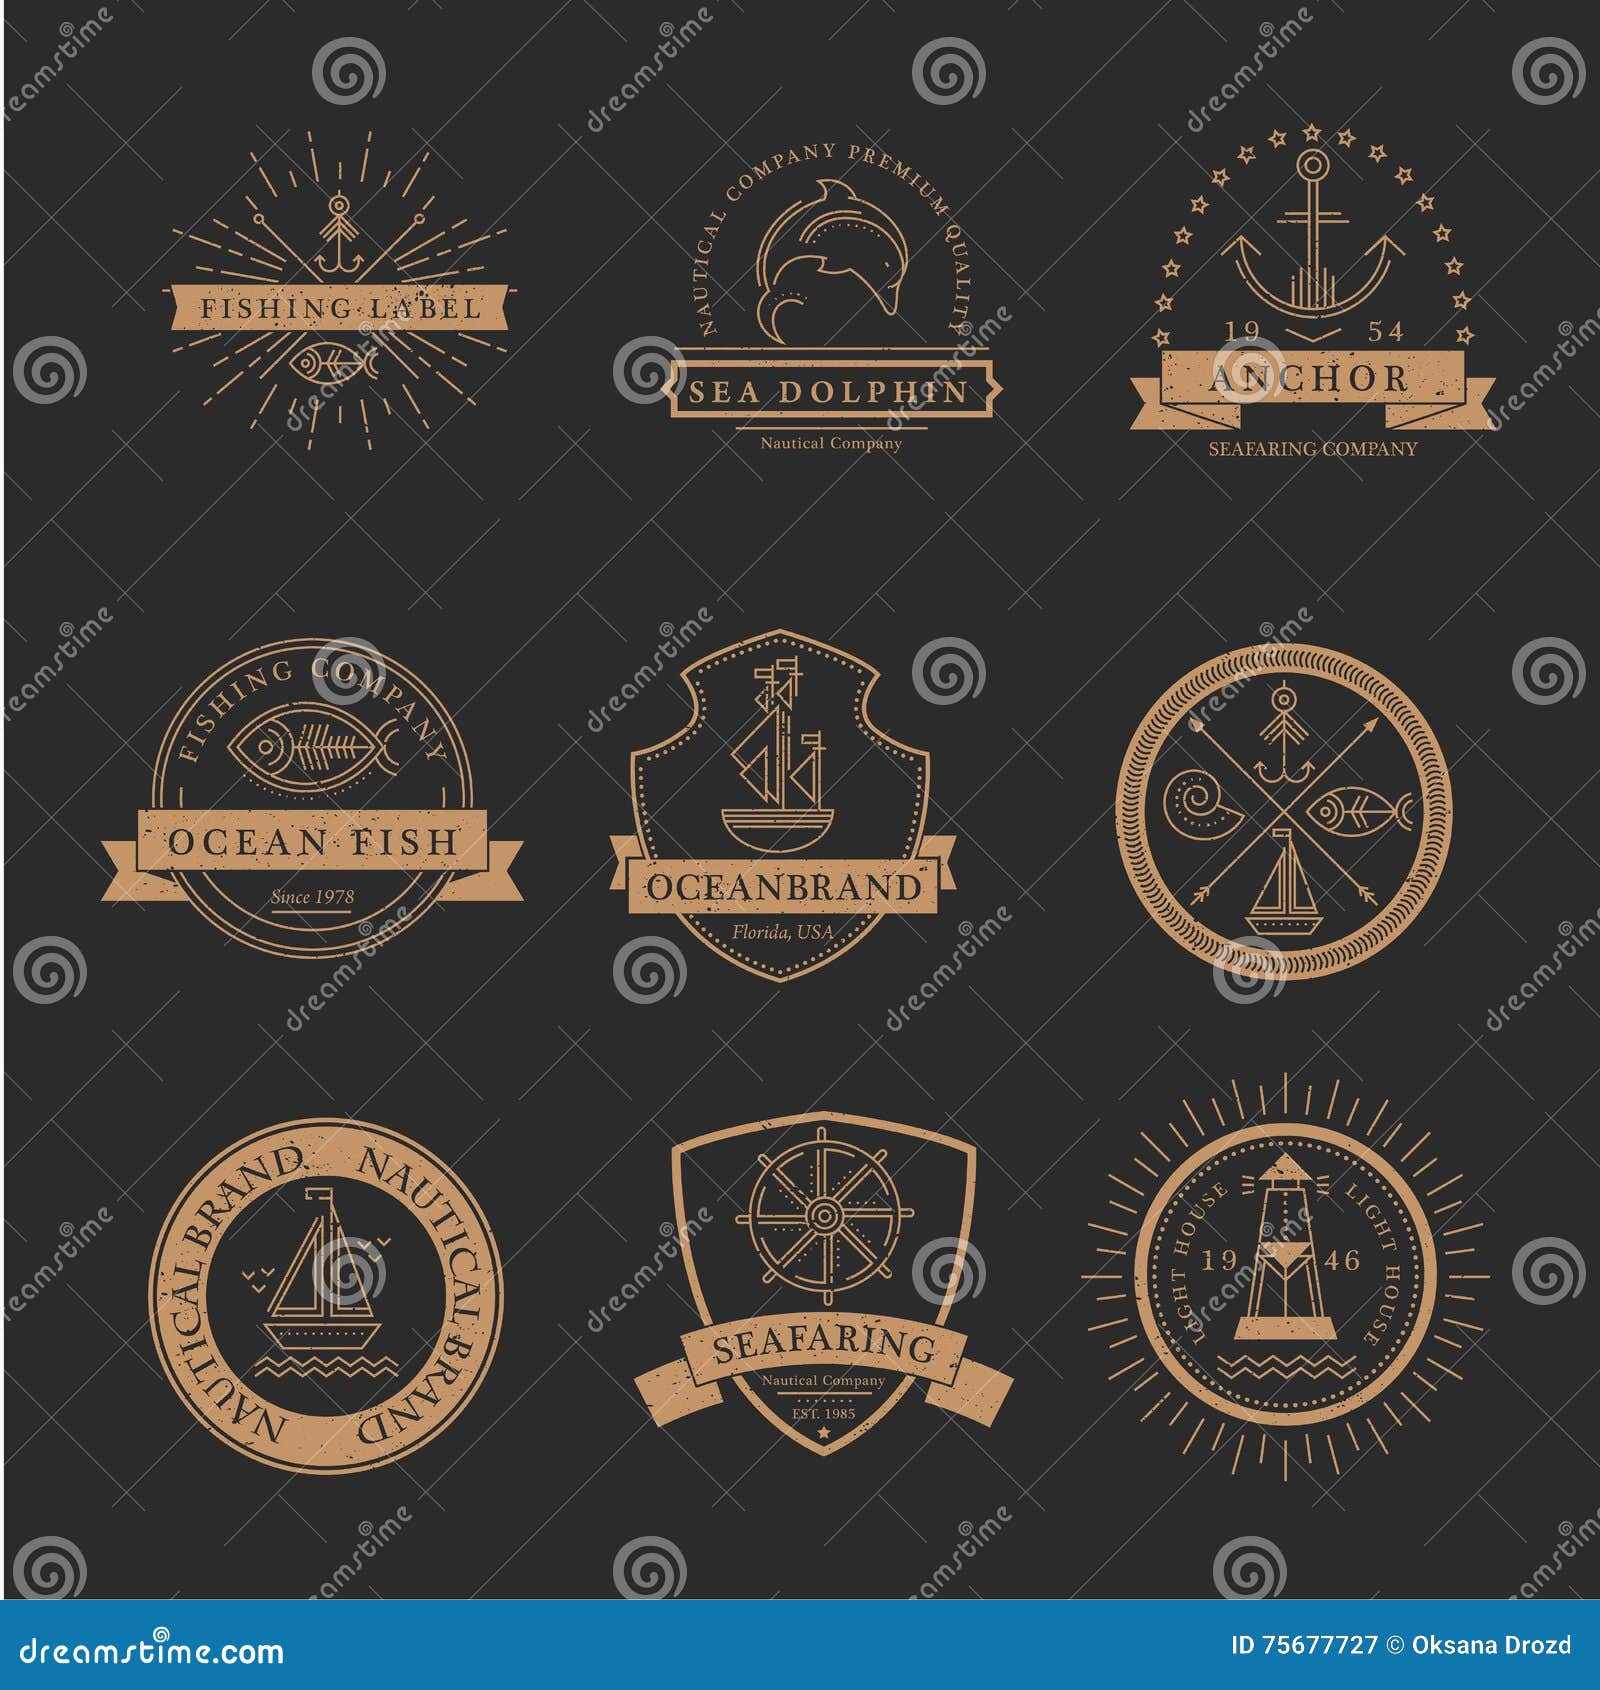 set of nautical seafaring badges, labels and logos